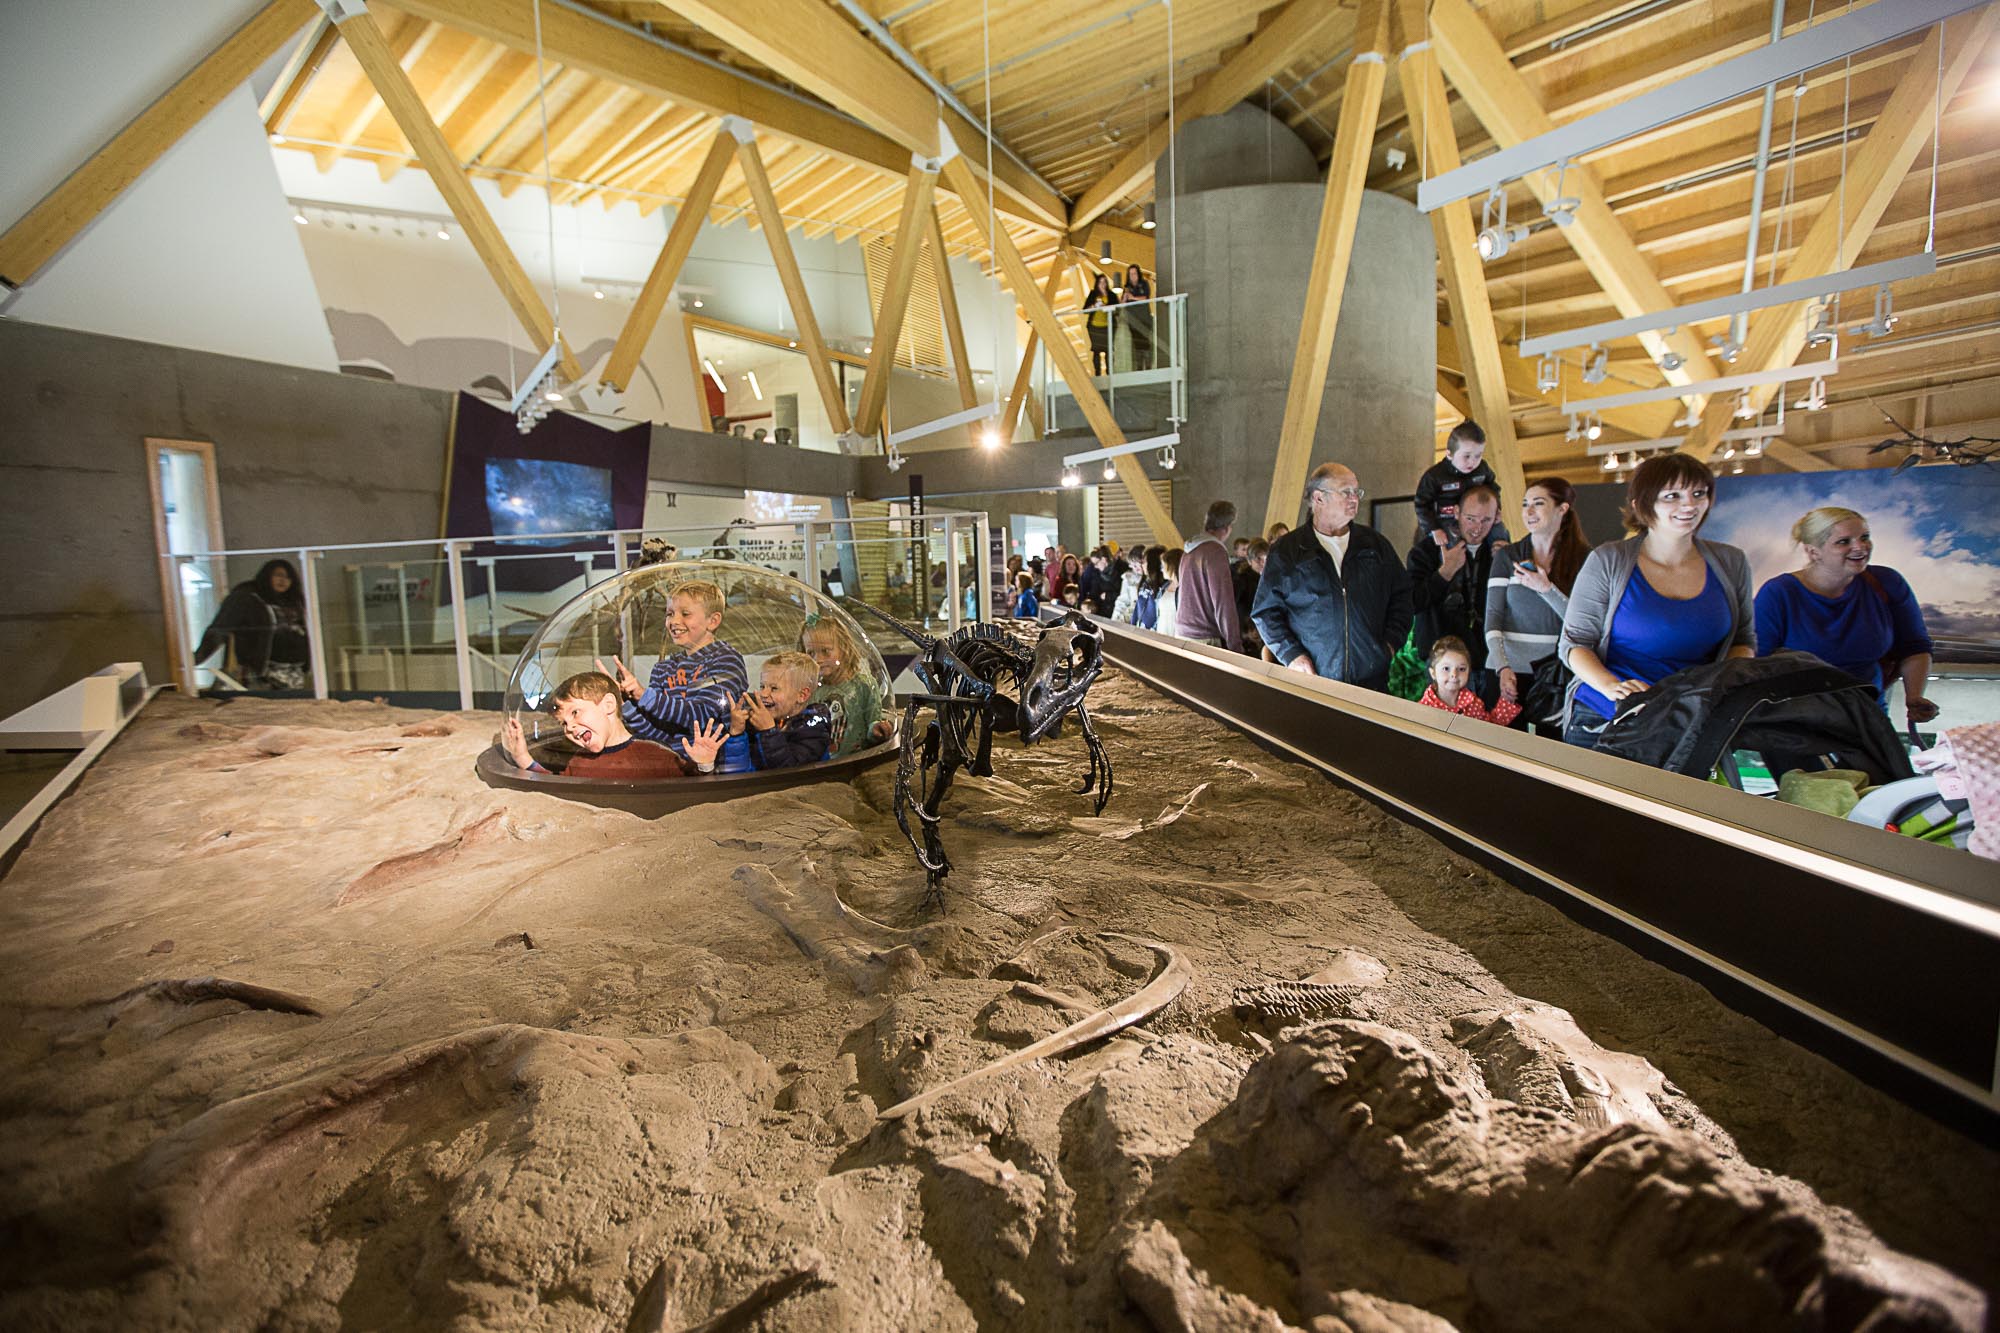 Dino museum makes executive director job offer